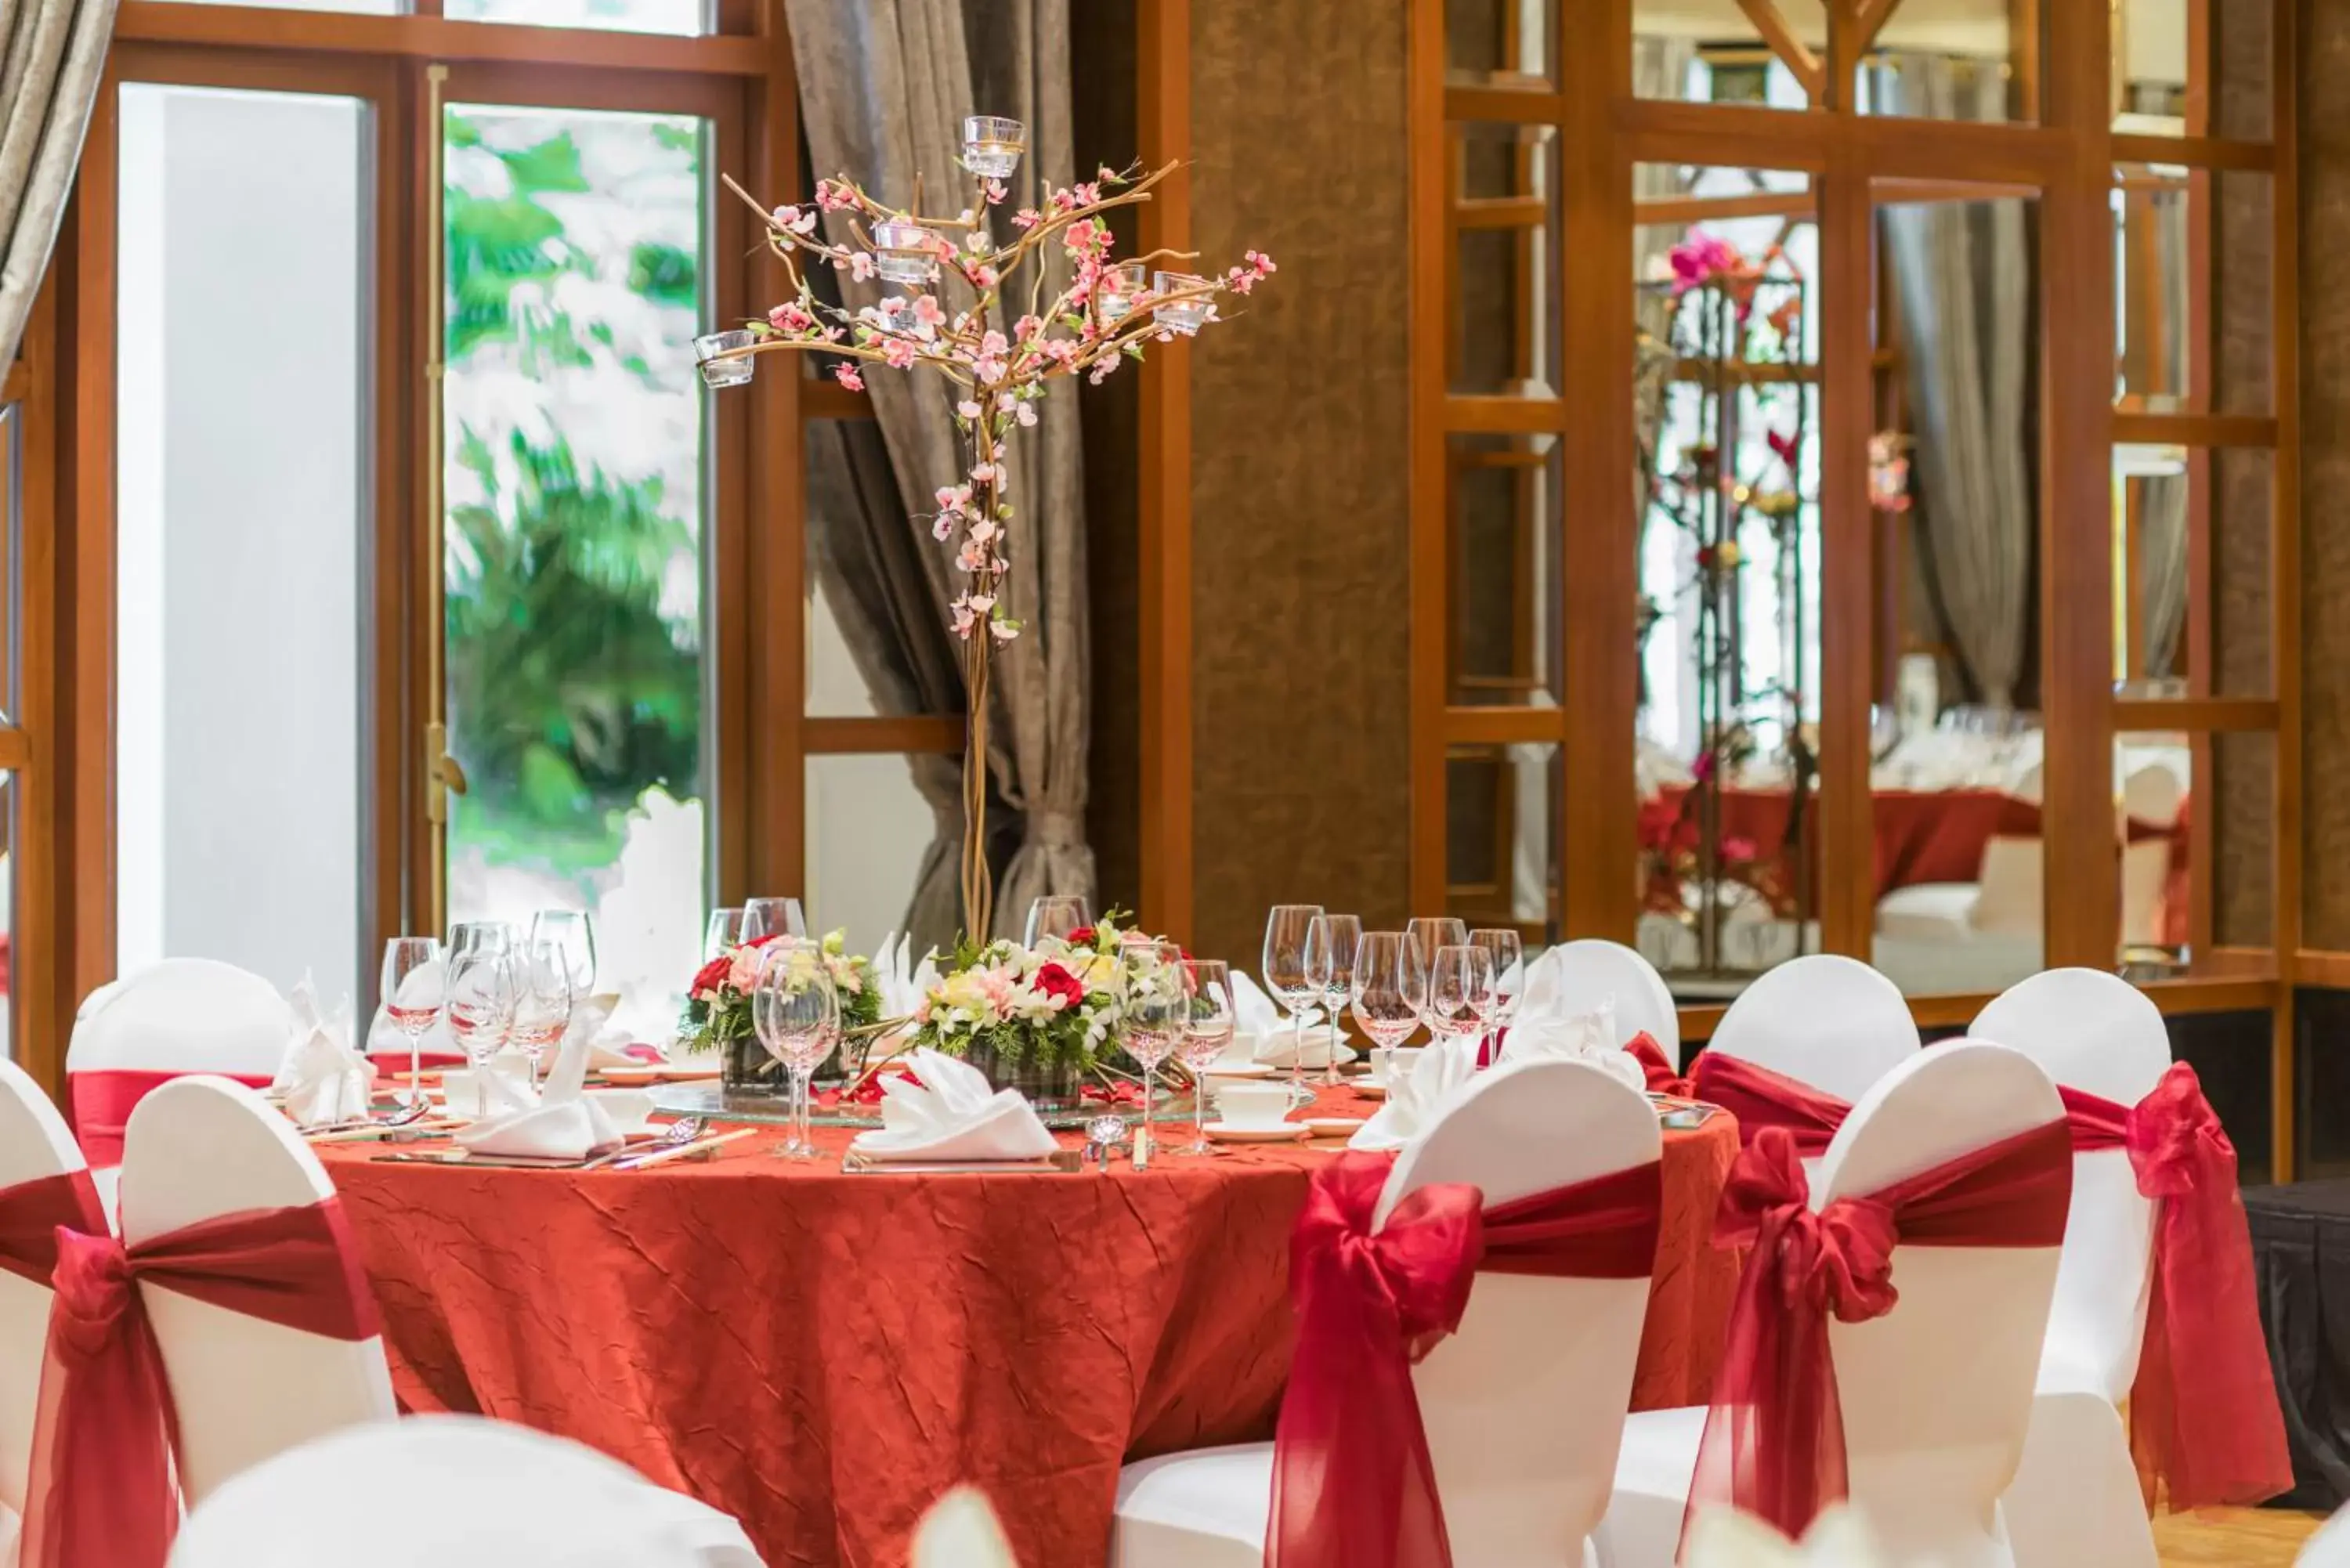 Banquet/Function facilities, Banquet Facilities in Sofitel Singapore Sentosa Resort & Spa